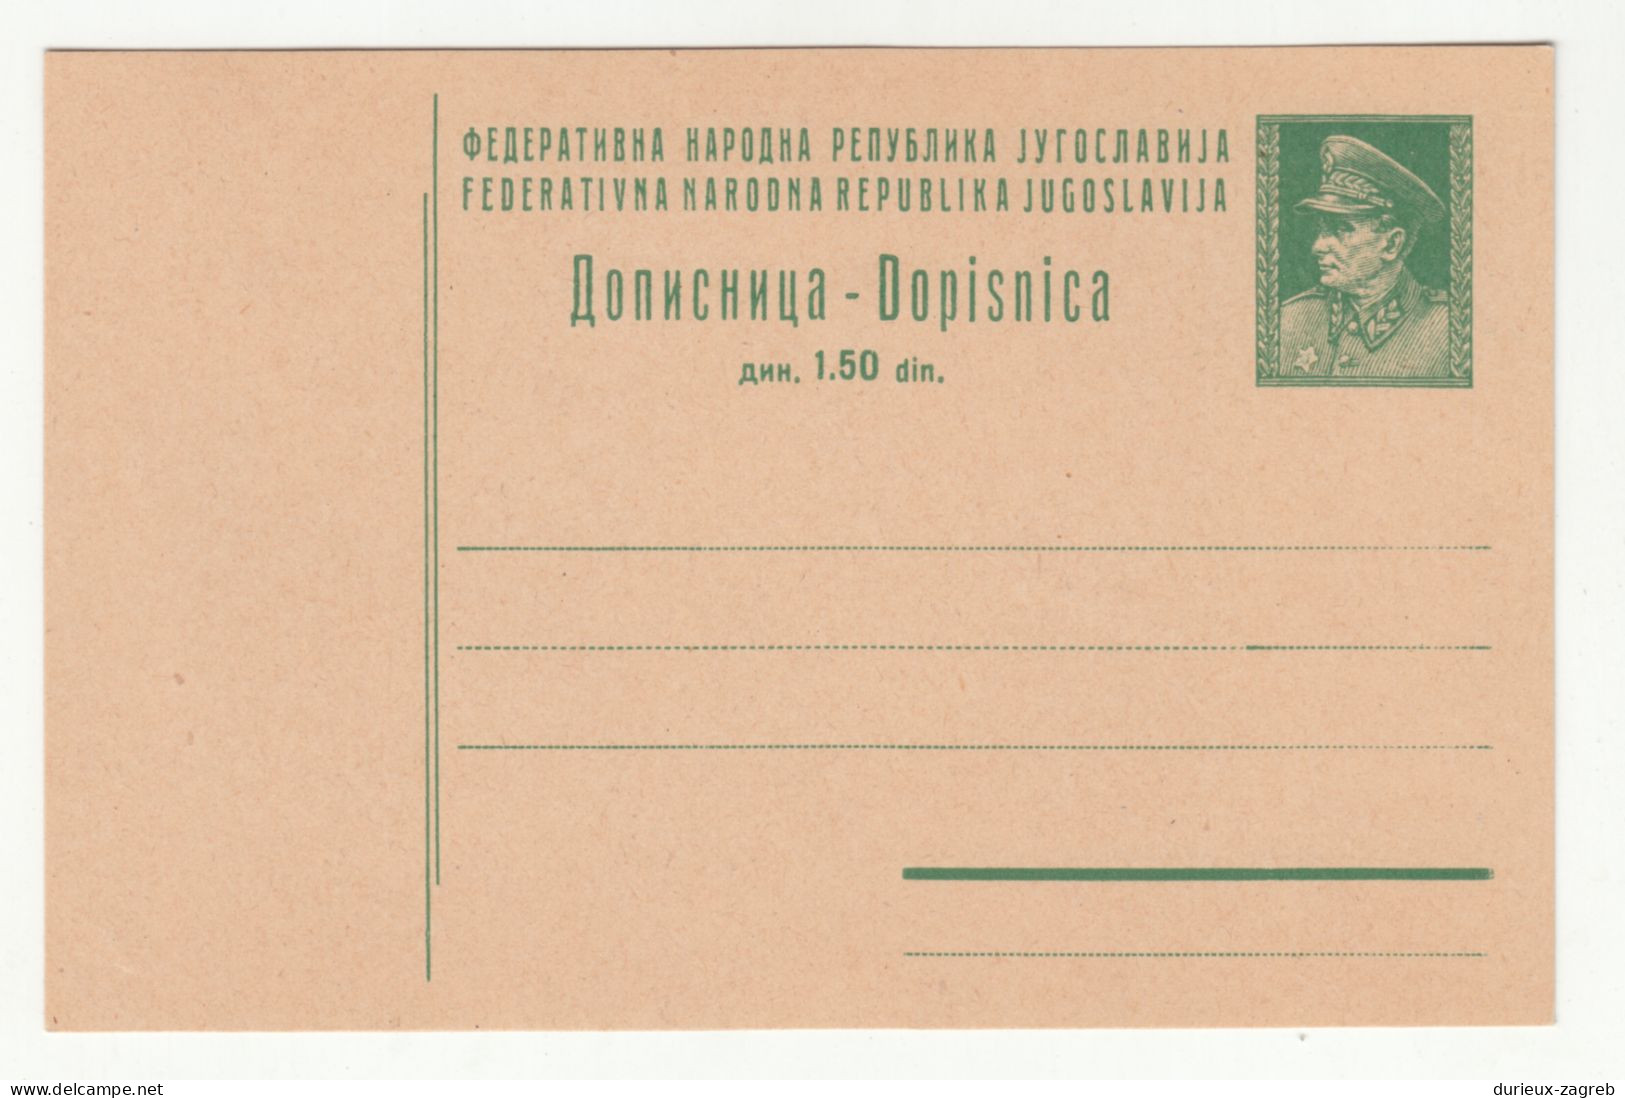 Yugoslavia FNR Postal Stationery Postcard Unused B240401 - Postal Stationery